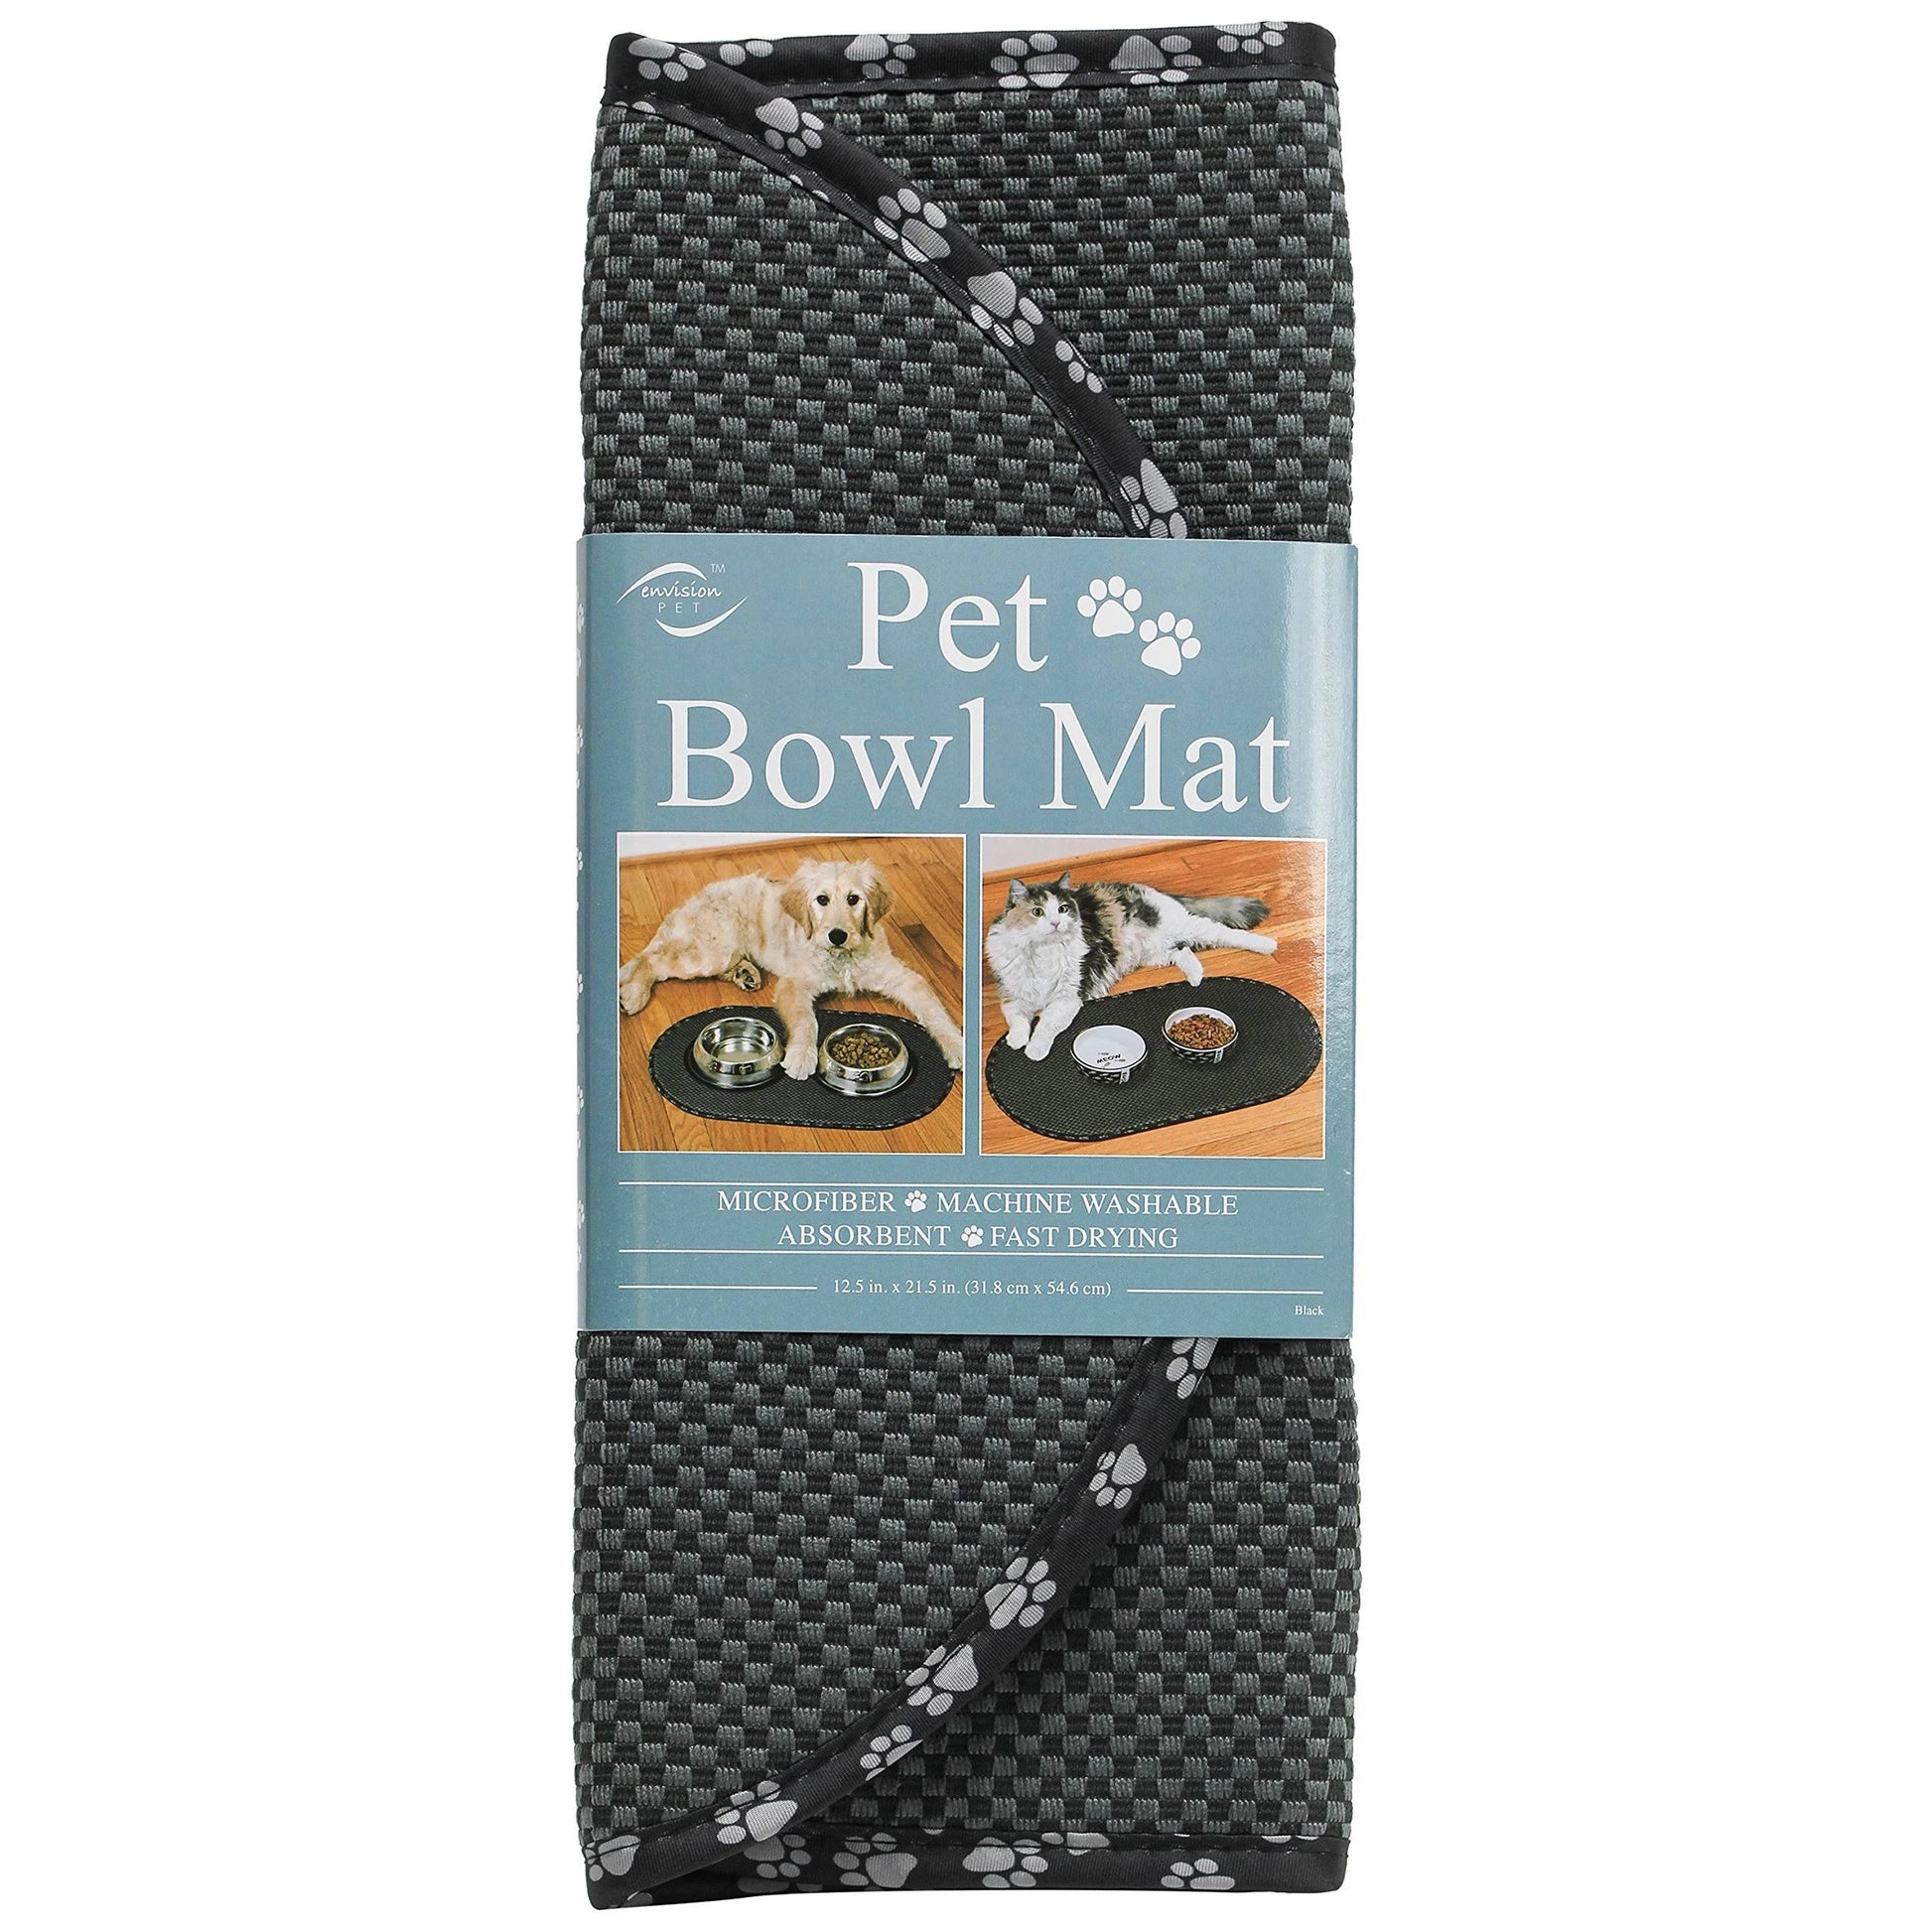 Water Bowl Mat Dog Feeding Absorbent Microfiber Dogs Food Anti Skid Pet